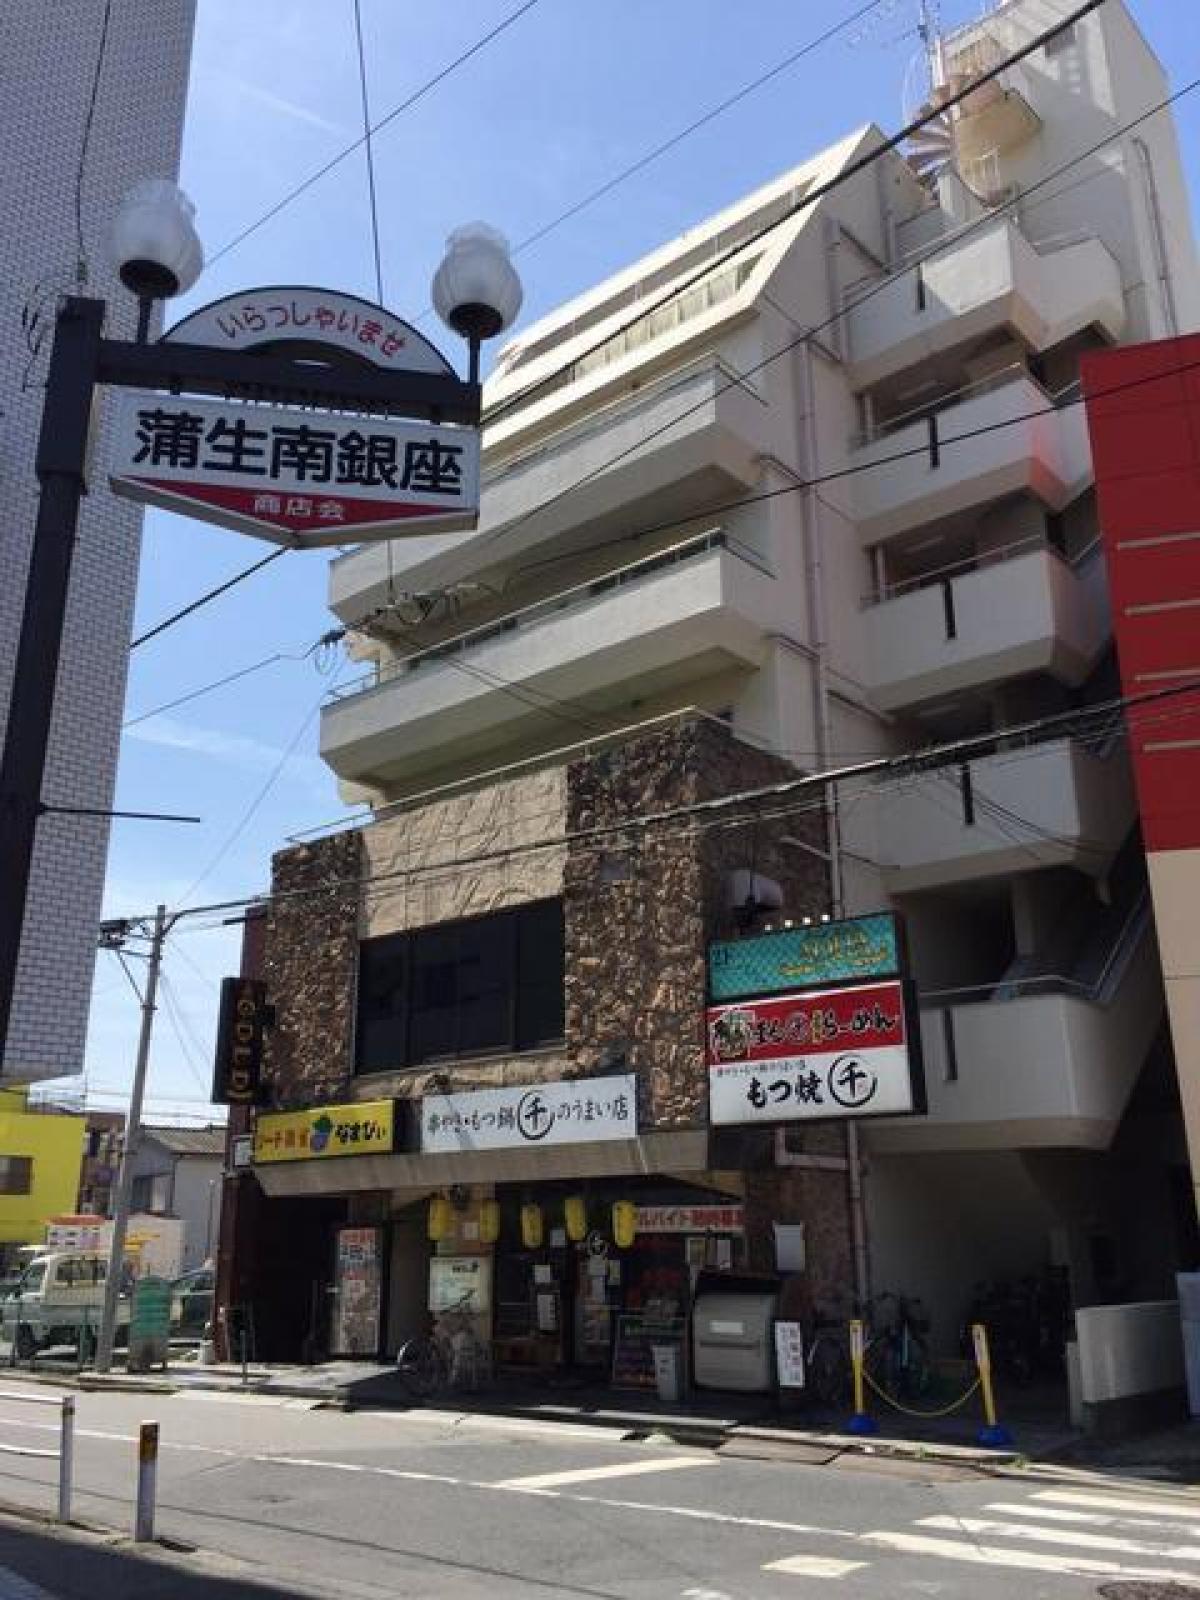 Picture of Apartment For Sale in Koshigaya Shi, Saitama, Japan